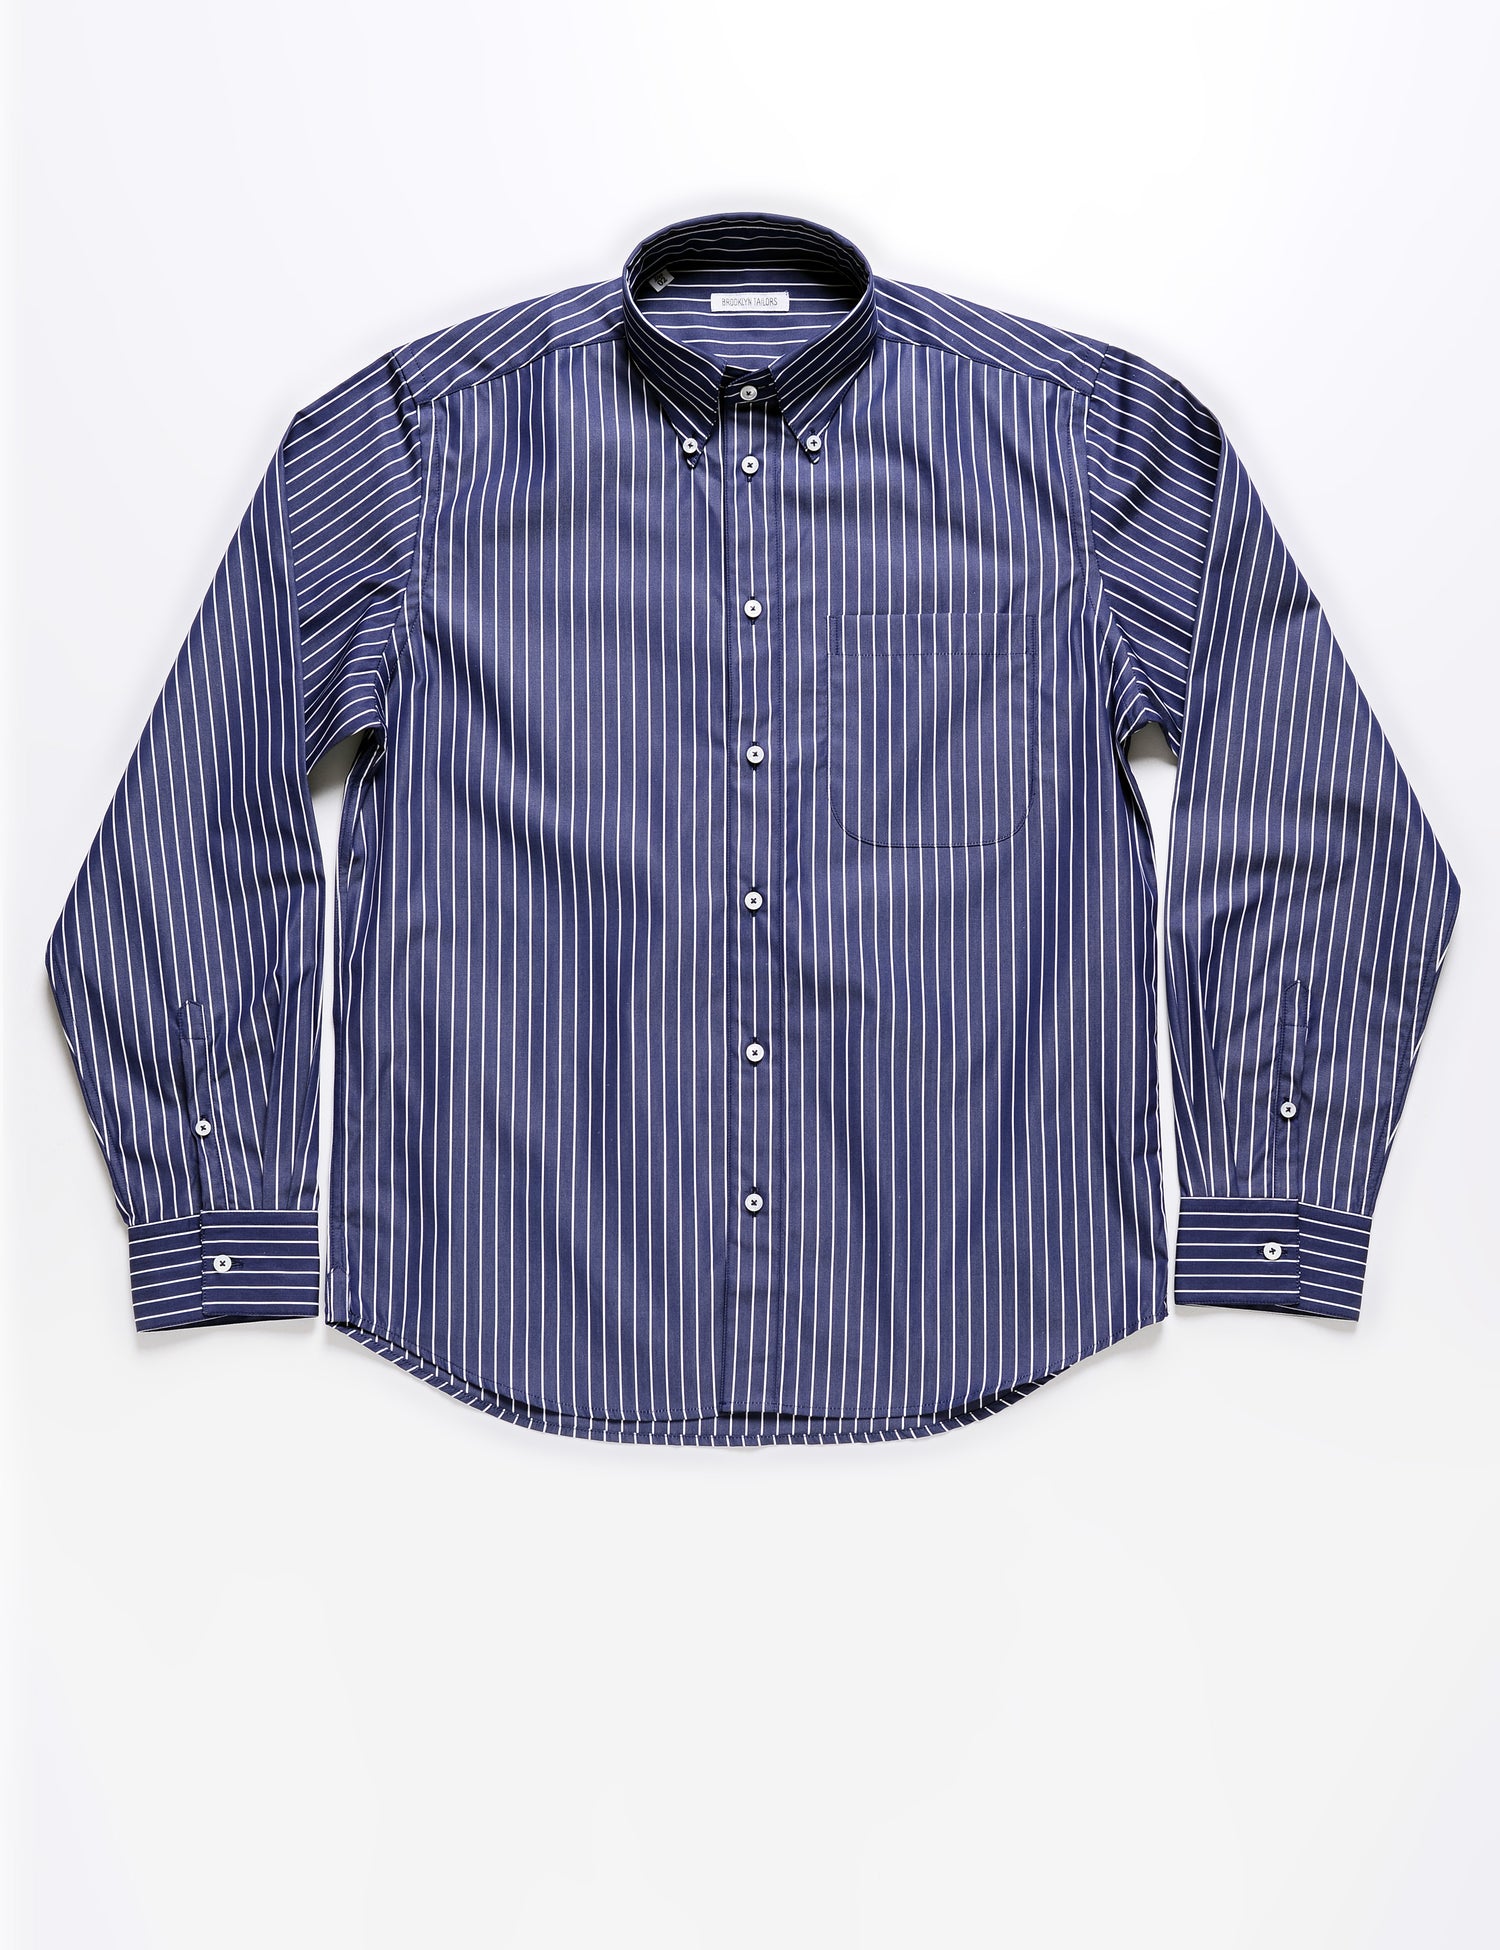 Brooklyn Tailors BKT14 Relaxed Shirt in Big Stripe - Ocean full length flat shot